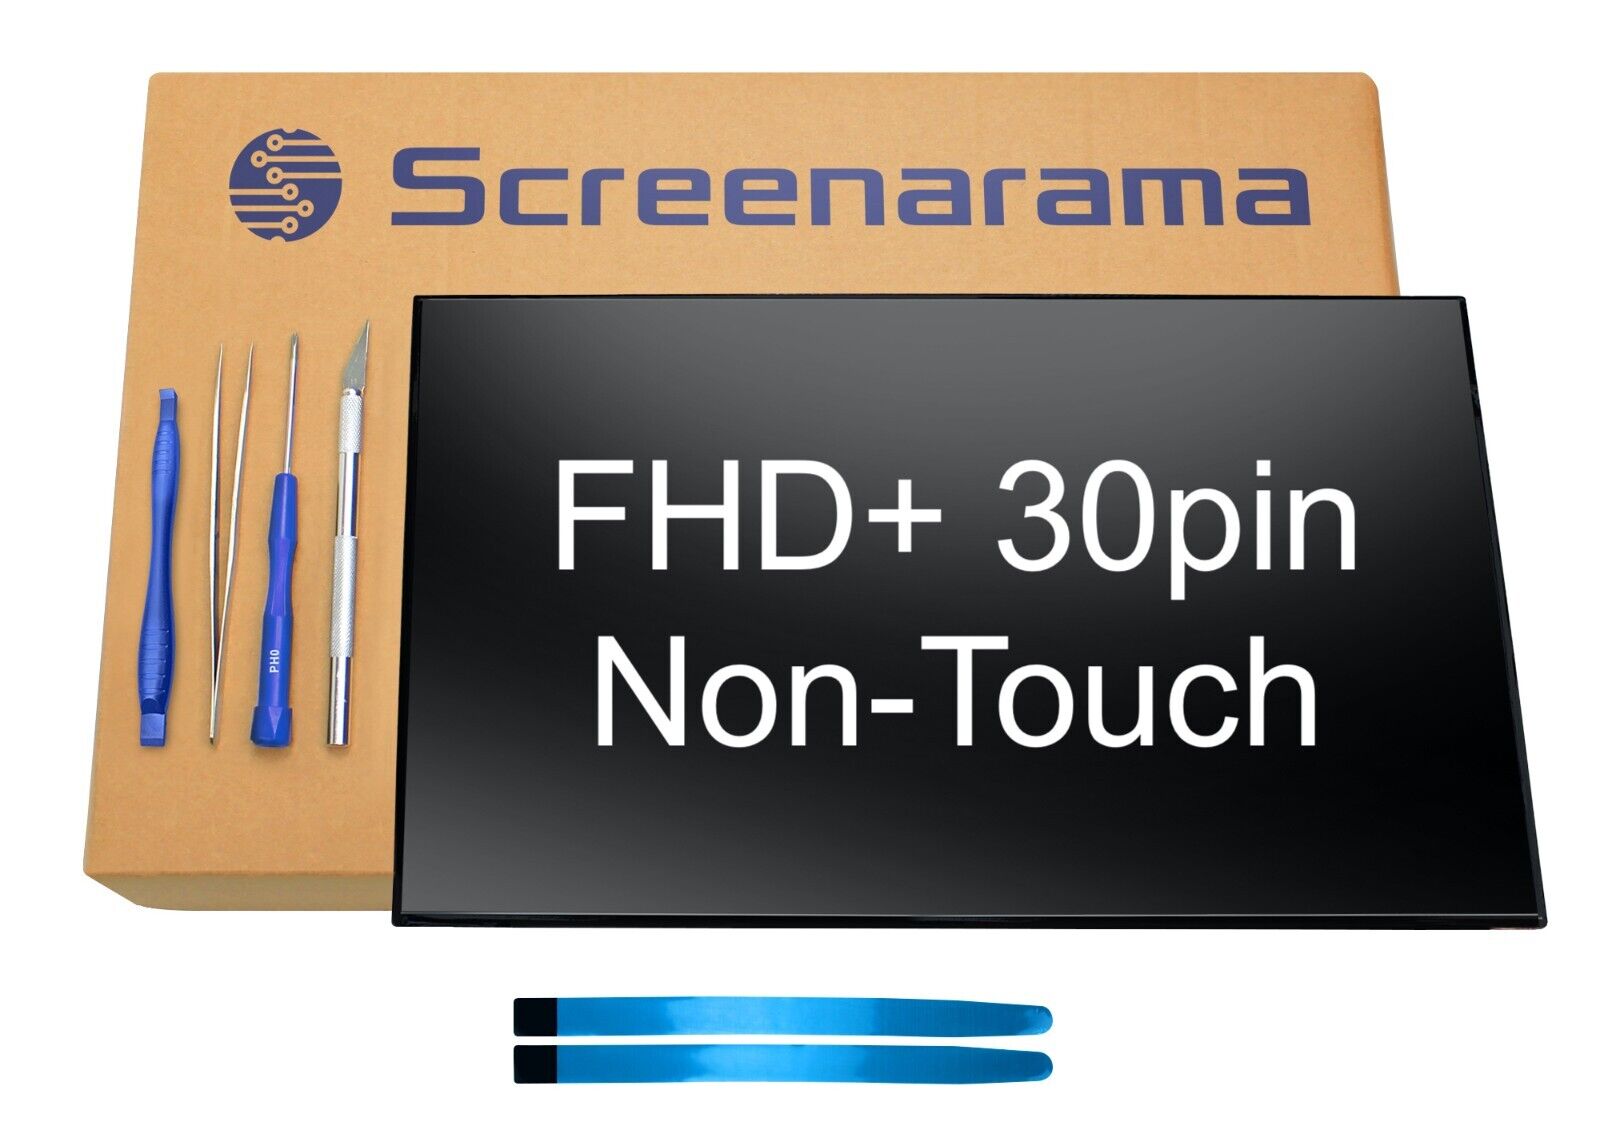 CMO InnoLux N140JCA-EEK FHD+ 30pin LED LCD Screen + Tools SCREENARAMA * FAST